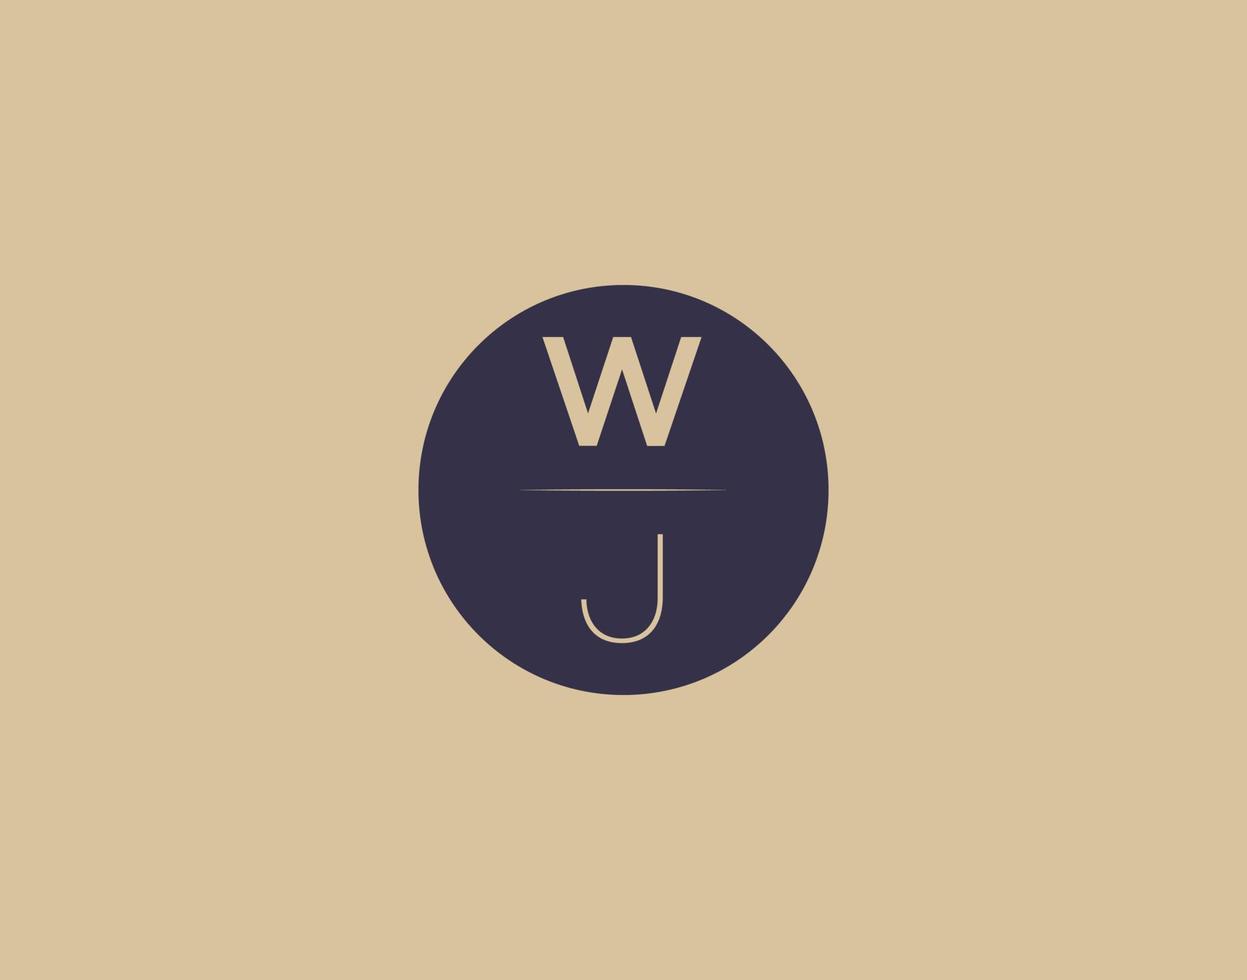 WJ letter modern elegant logo design vector images